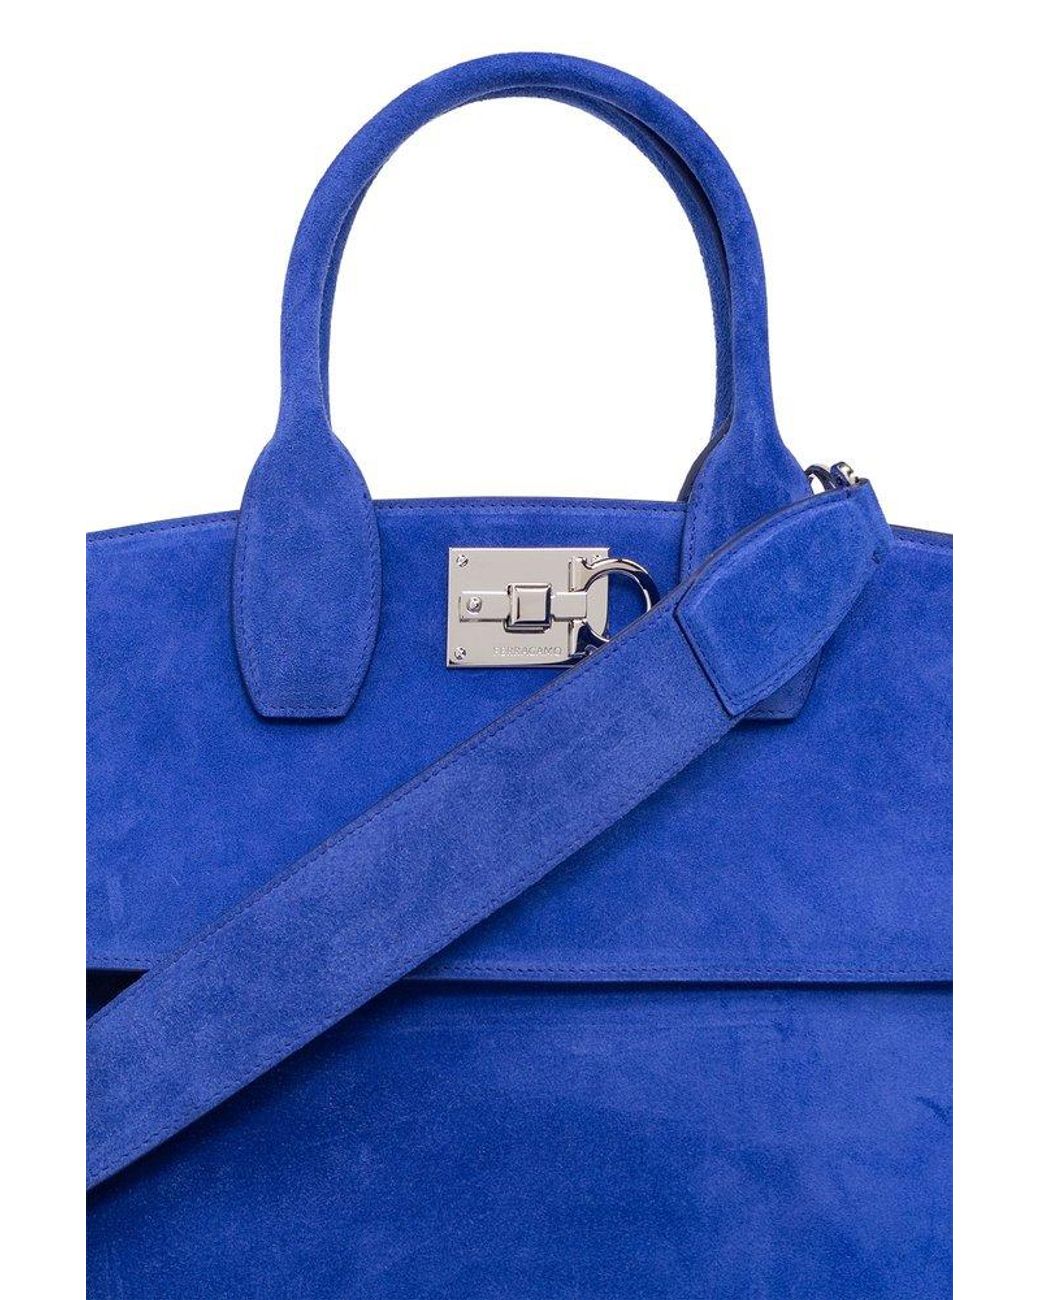 Ferragamo Women's ' Studio Soft Large' Shopper Bag - Blue - Totes